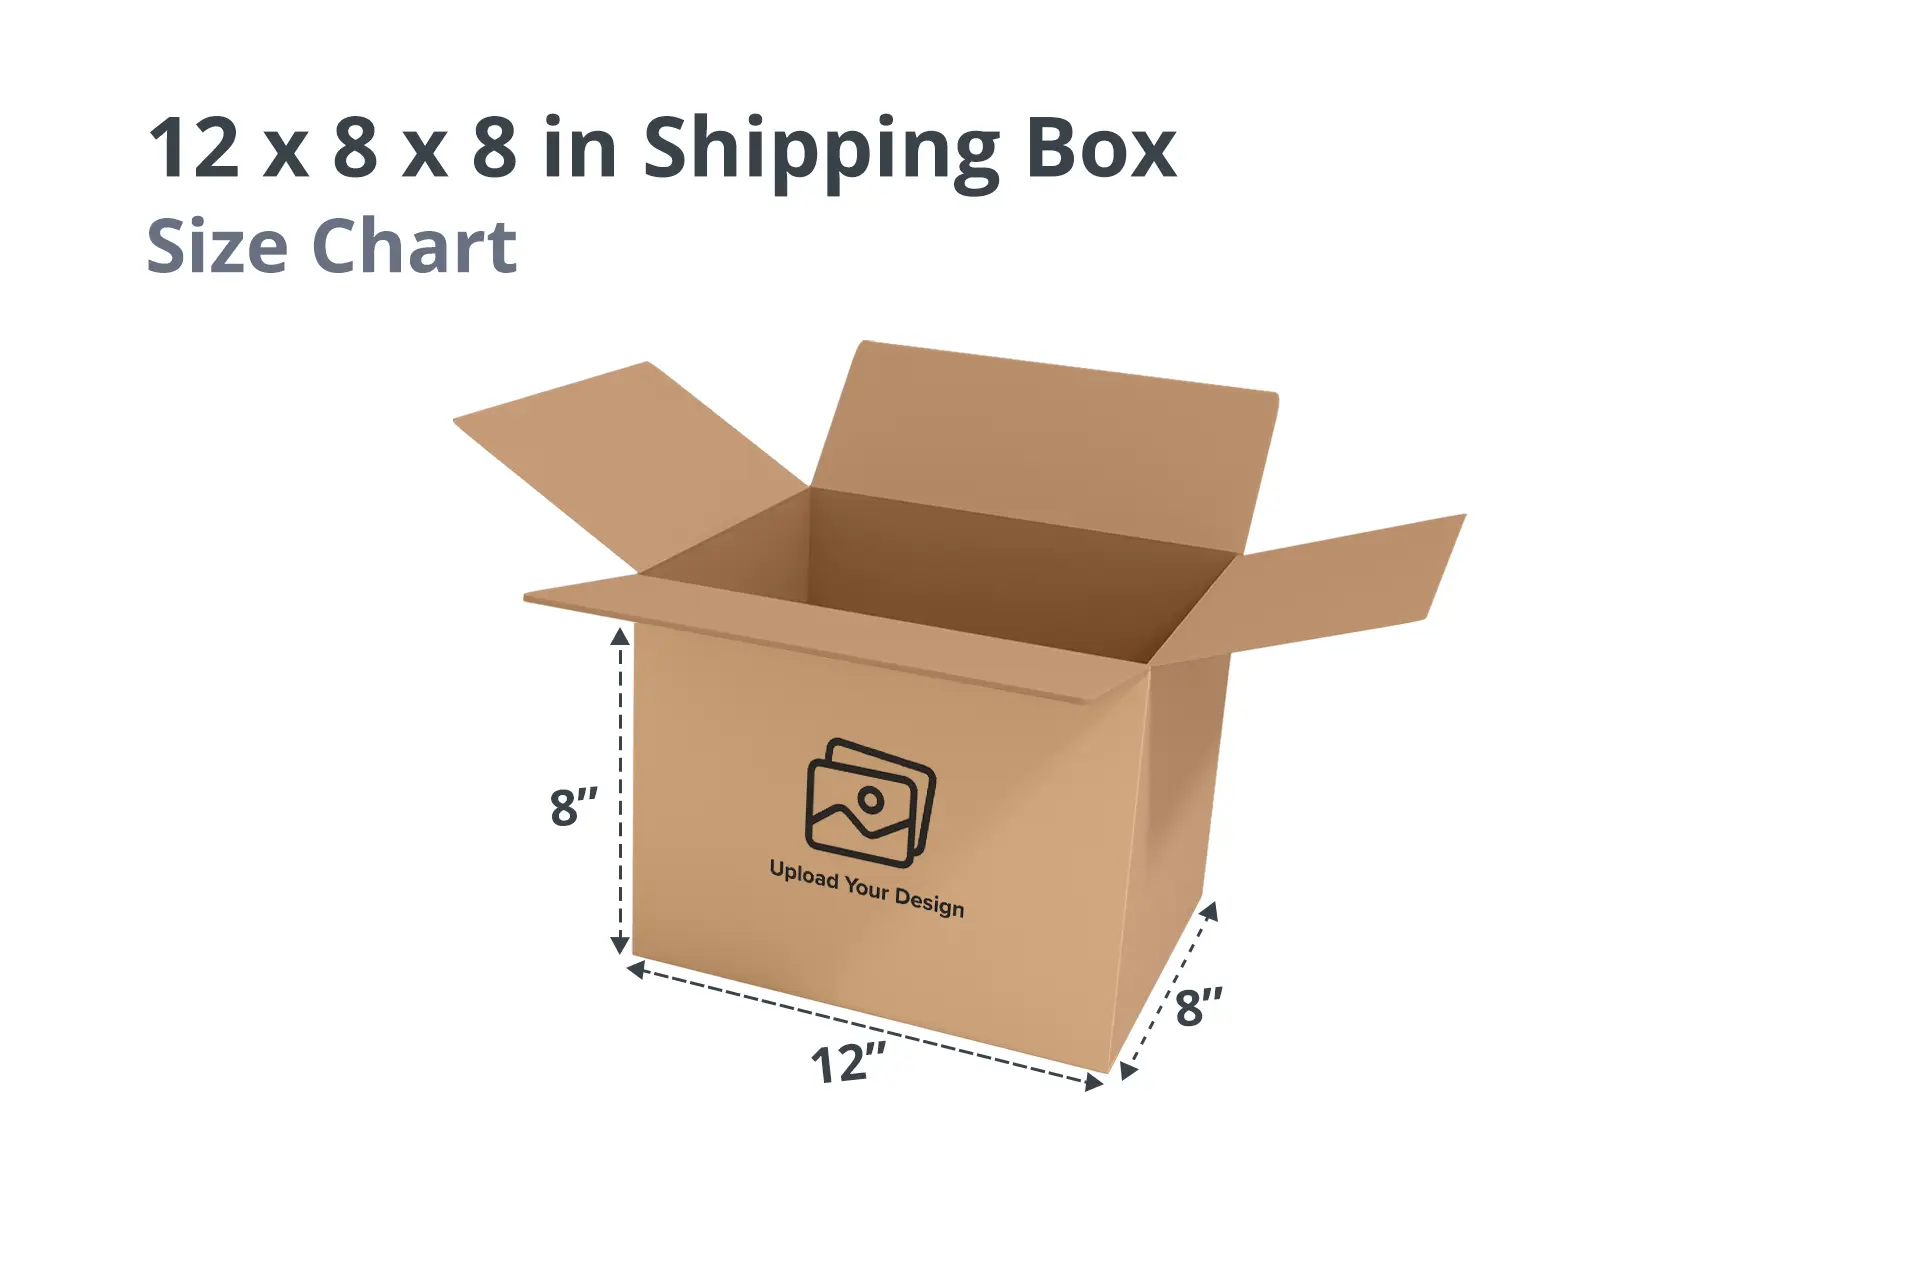 12 x 8 x 8 in Shipping Box